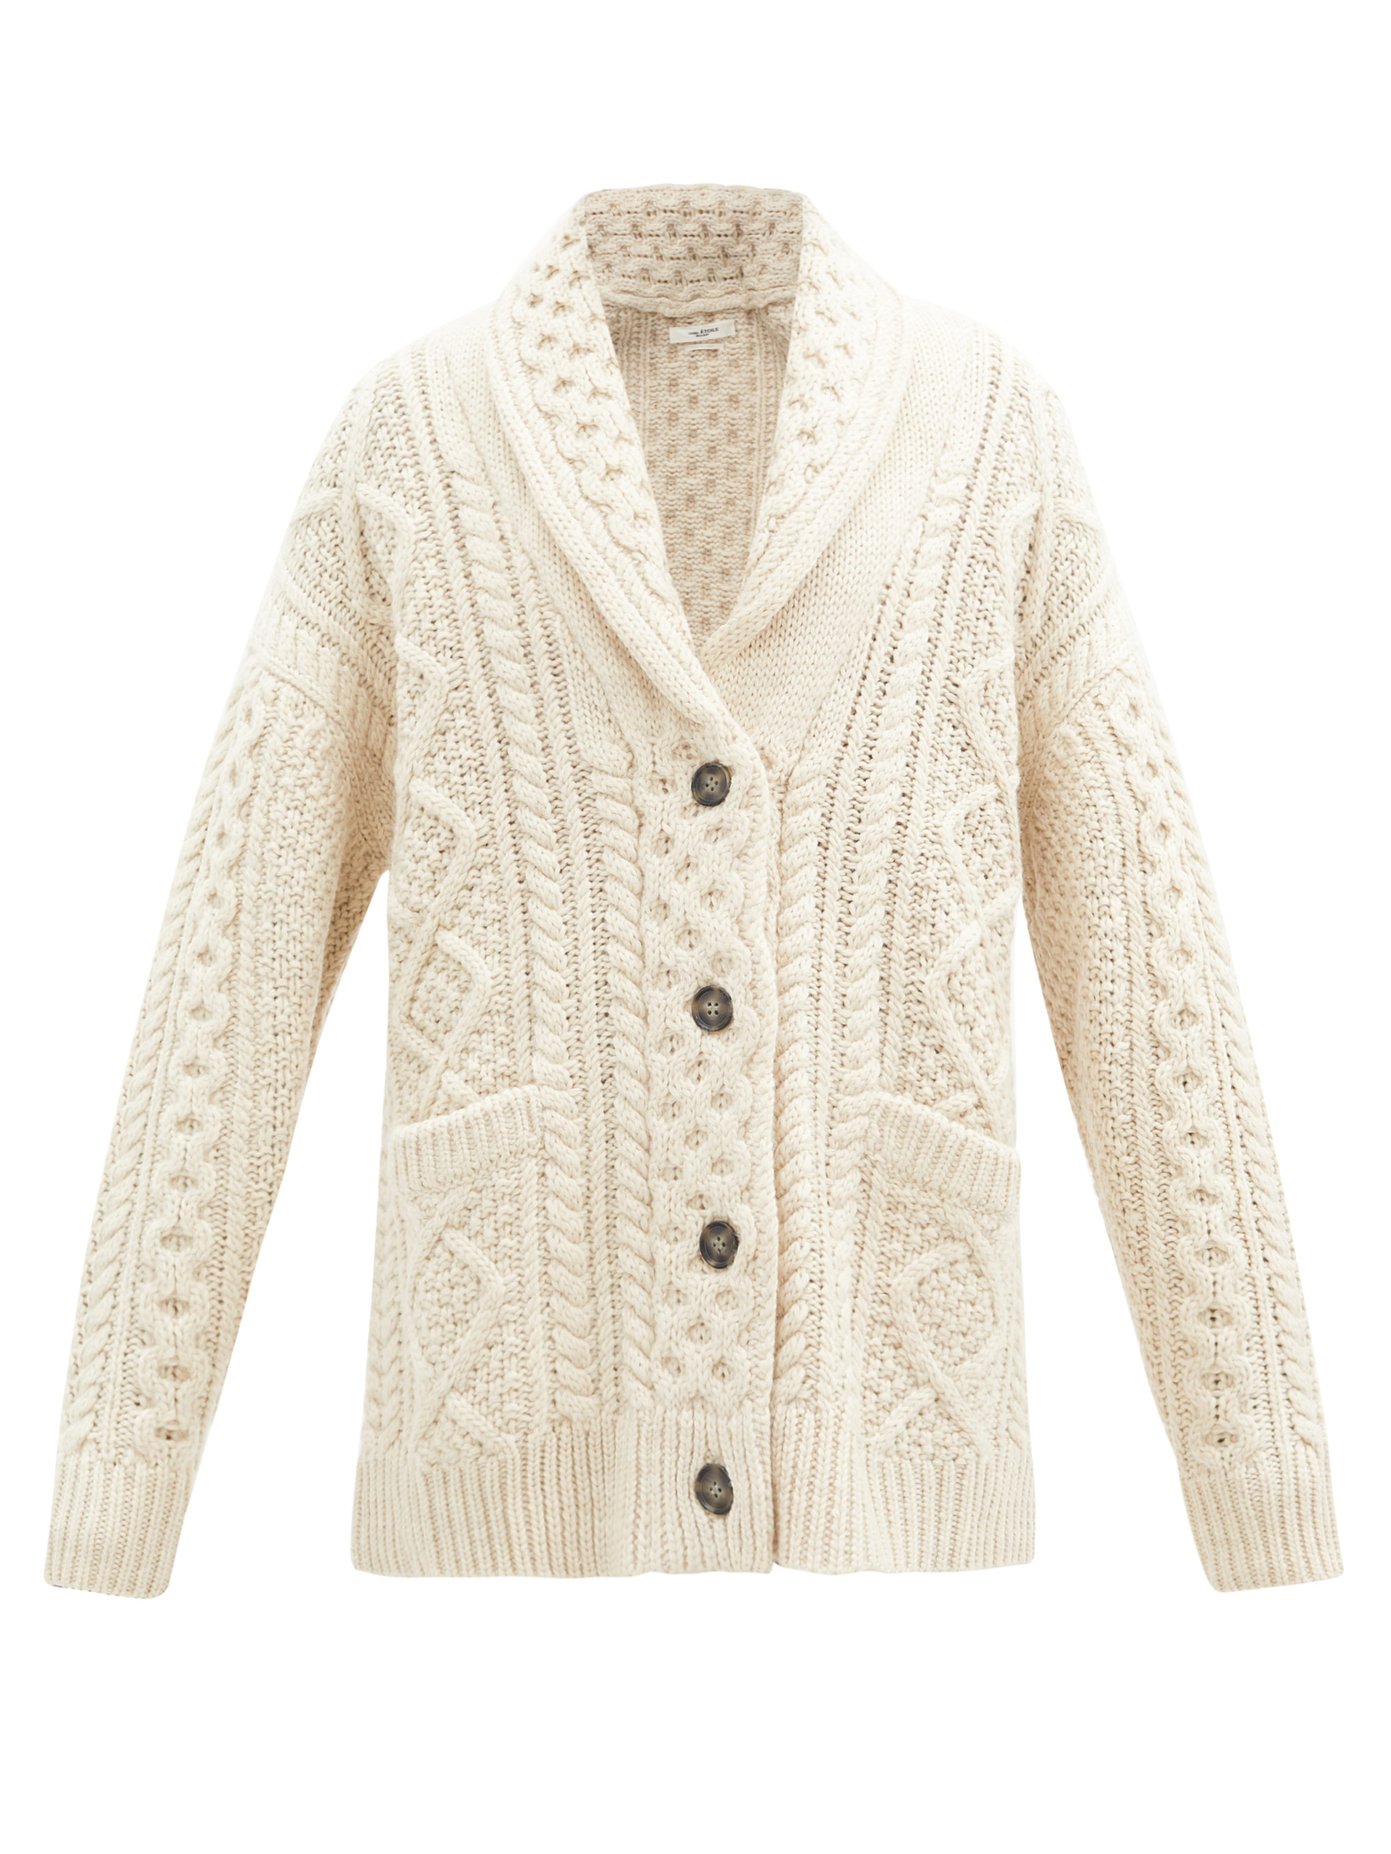 Isabel Cardigan Sweater Best Sale, SAVE 60% - mpgc.net